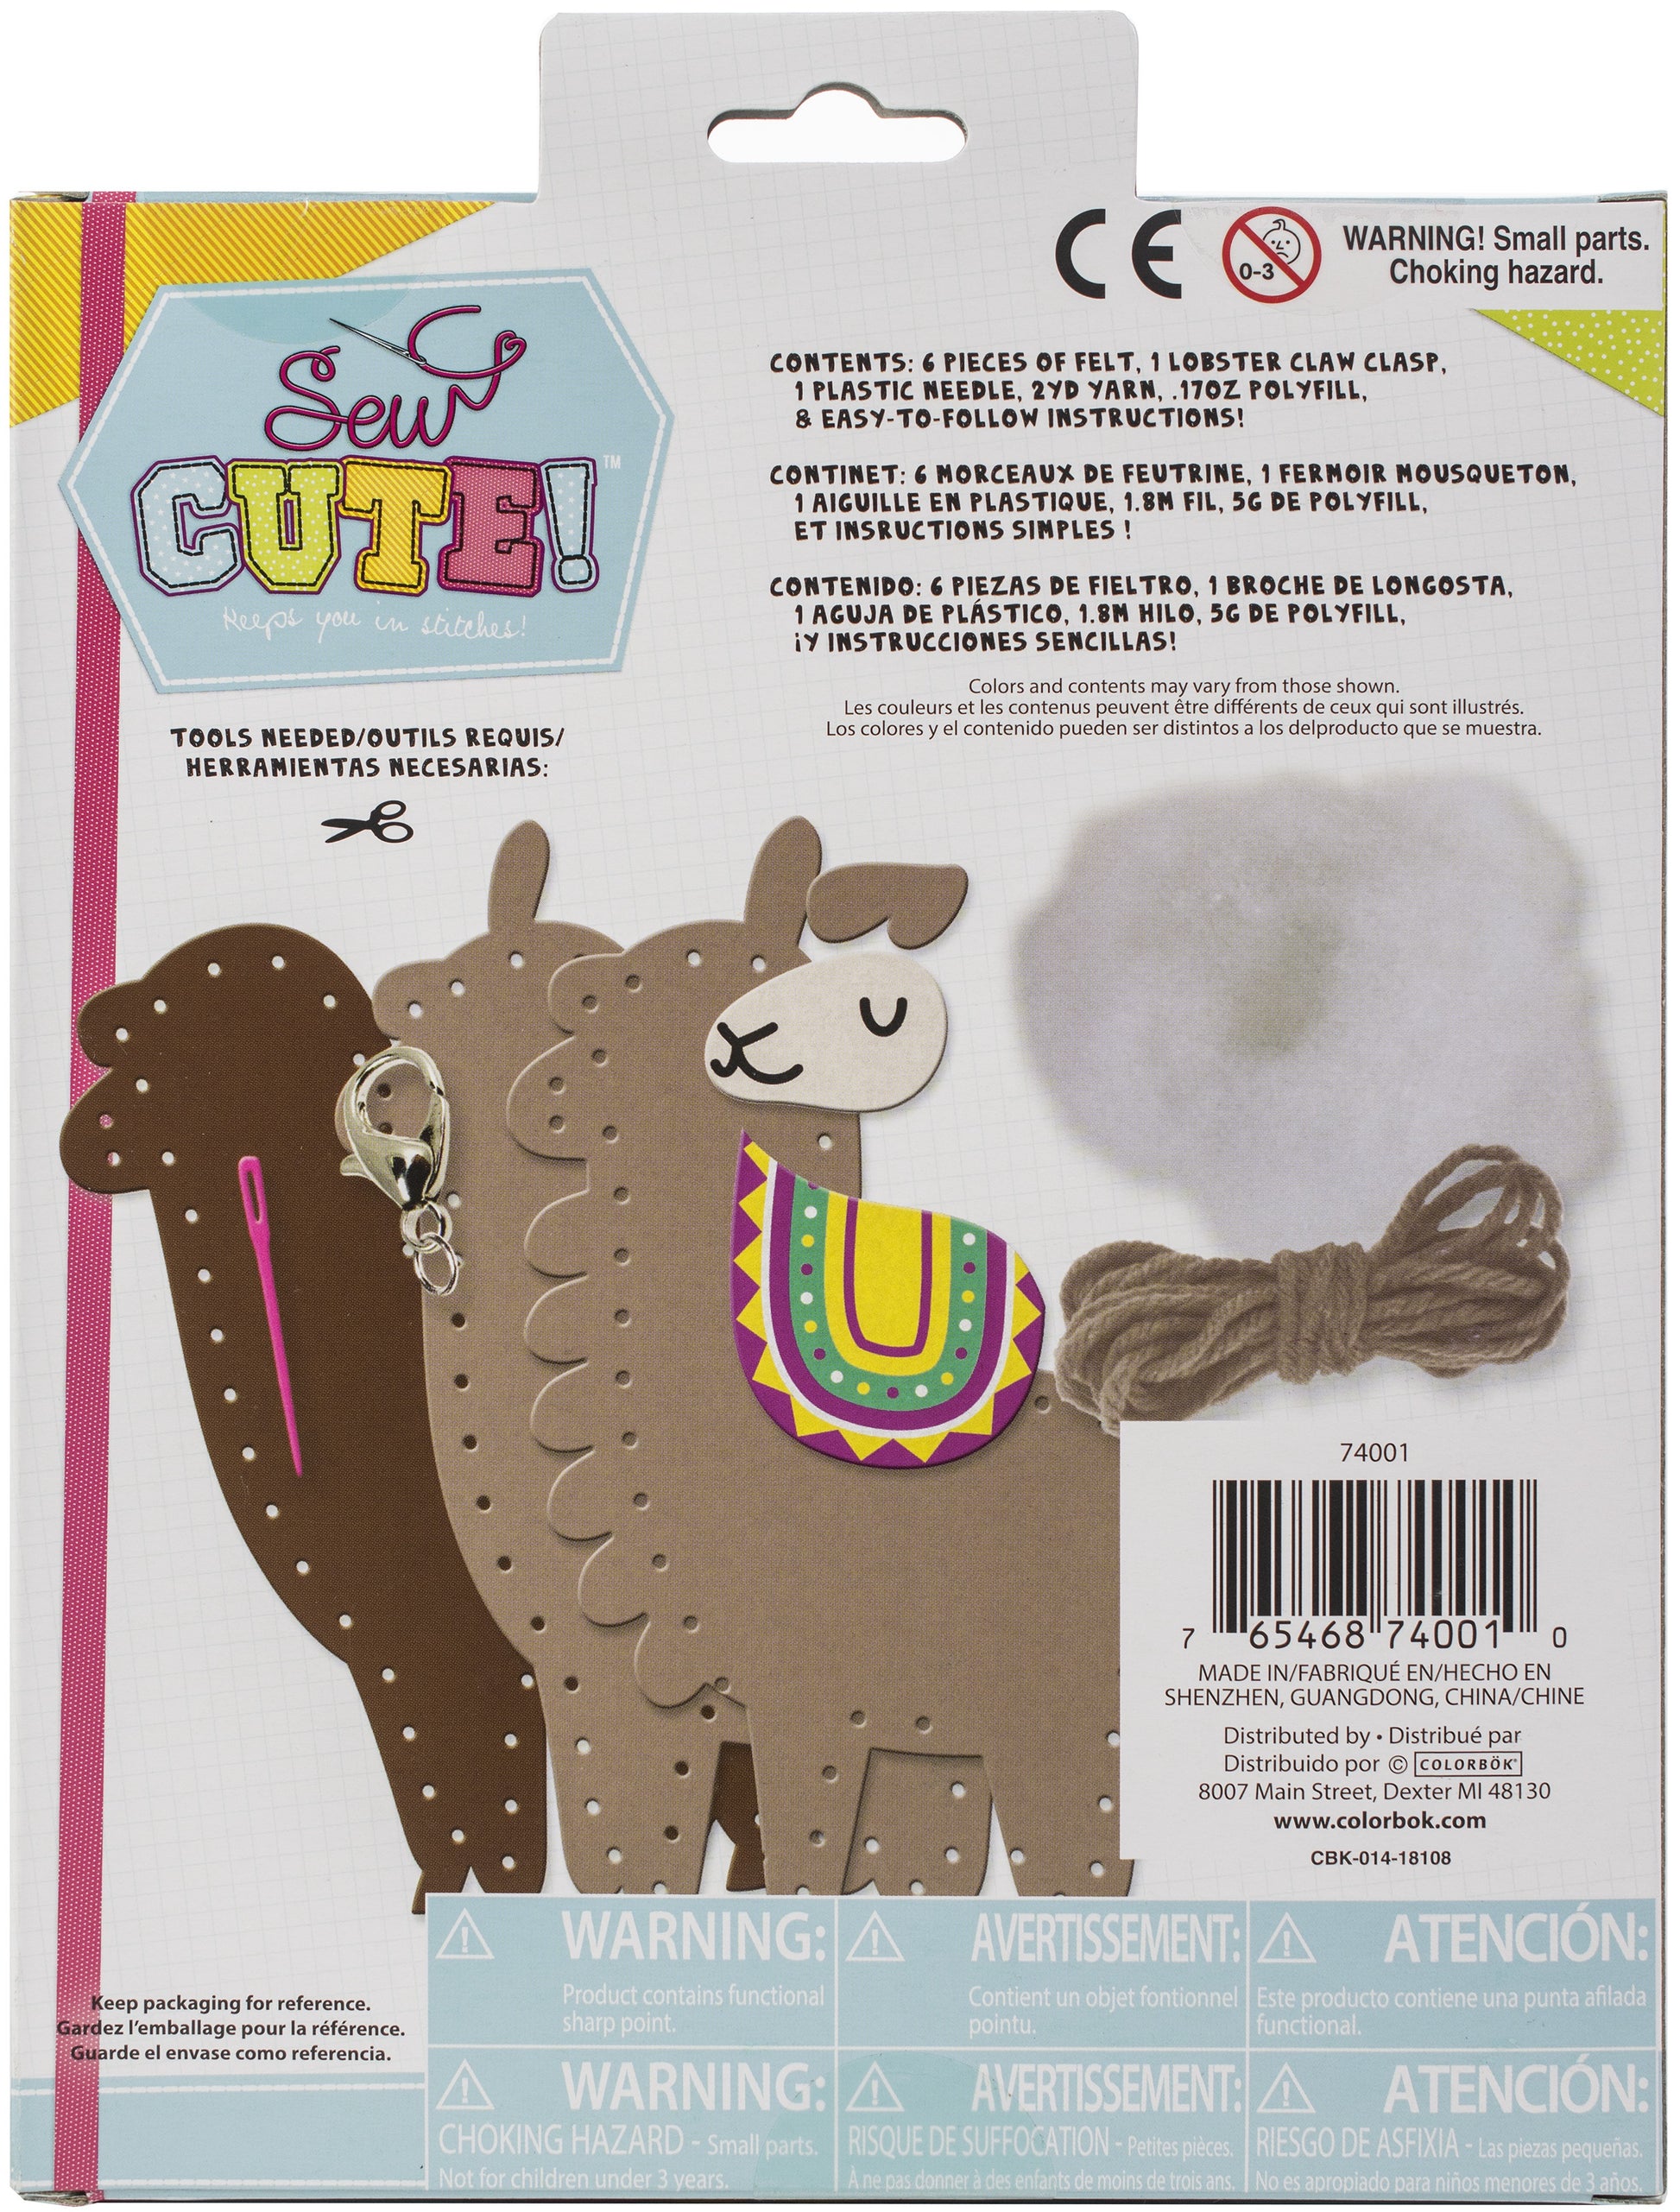 Sew Cute! Felt Backpack Clip Kit-Unicorn